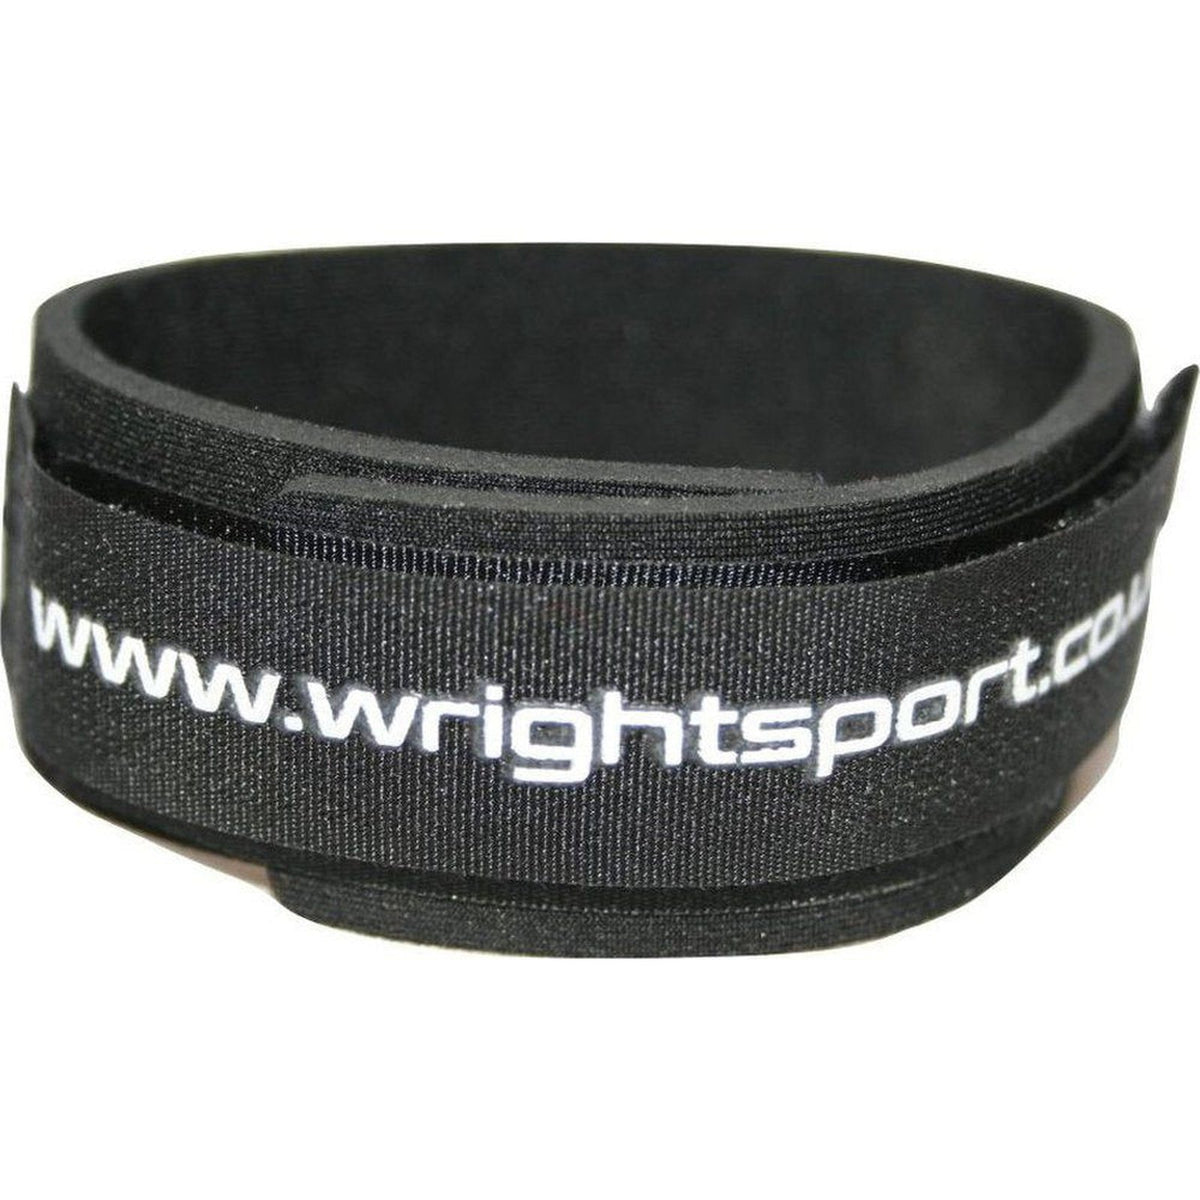 WrightSport Traithlon Timing Chip Bands